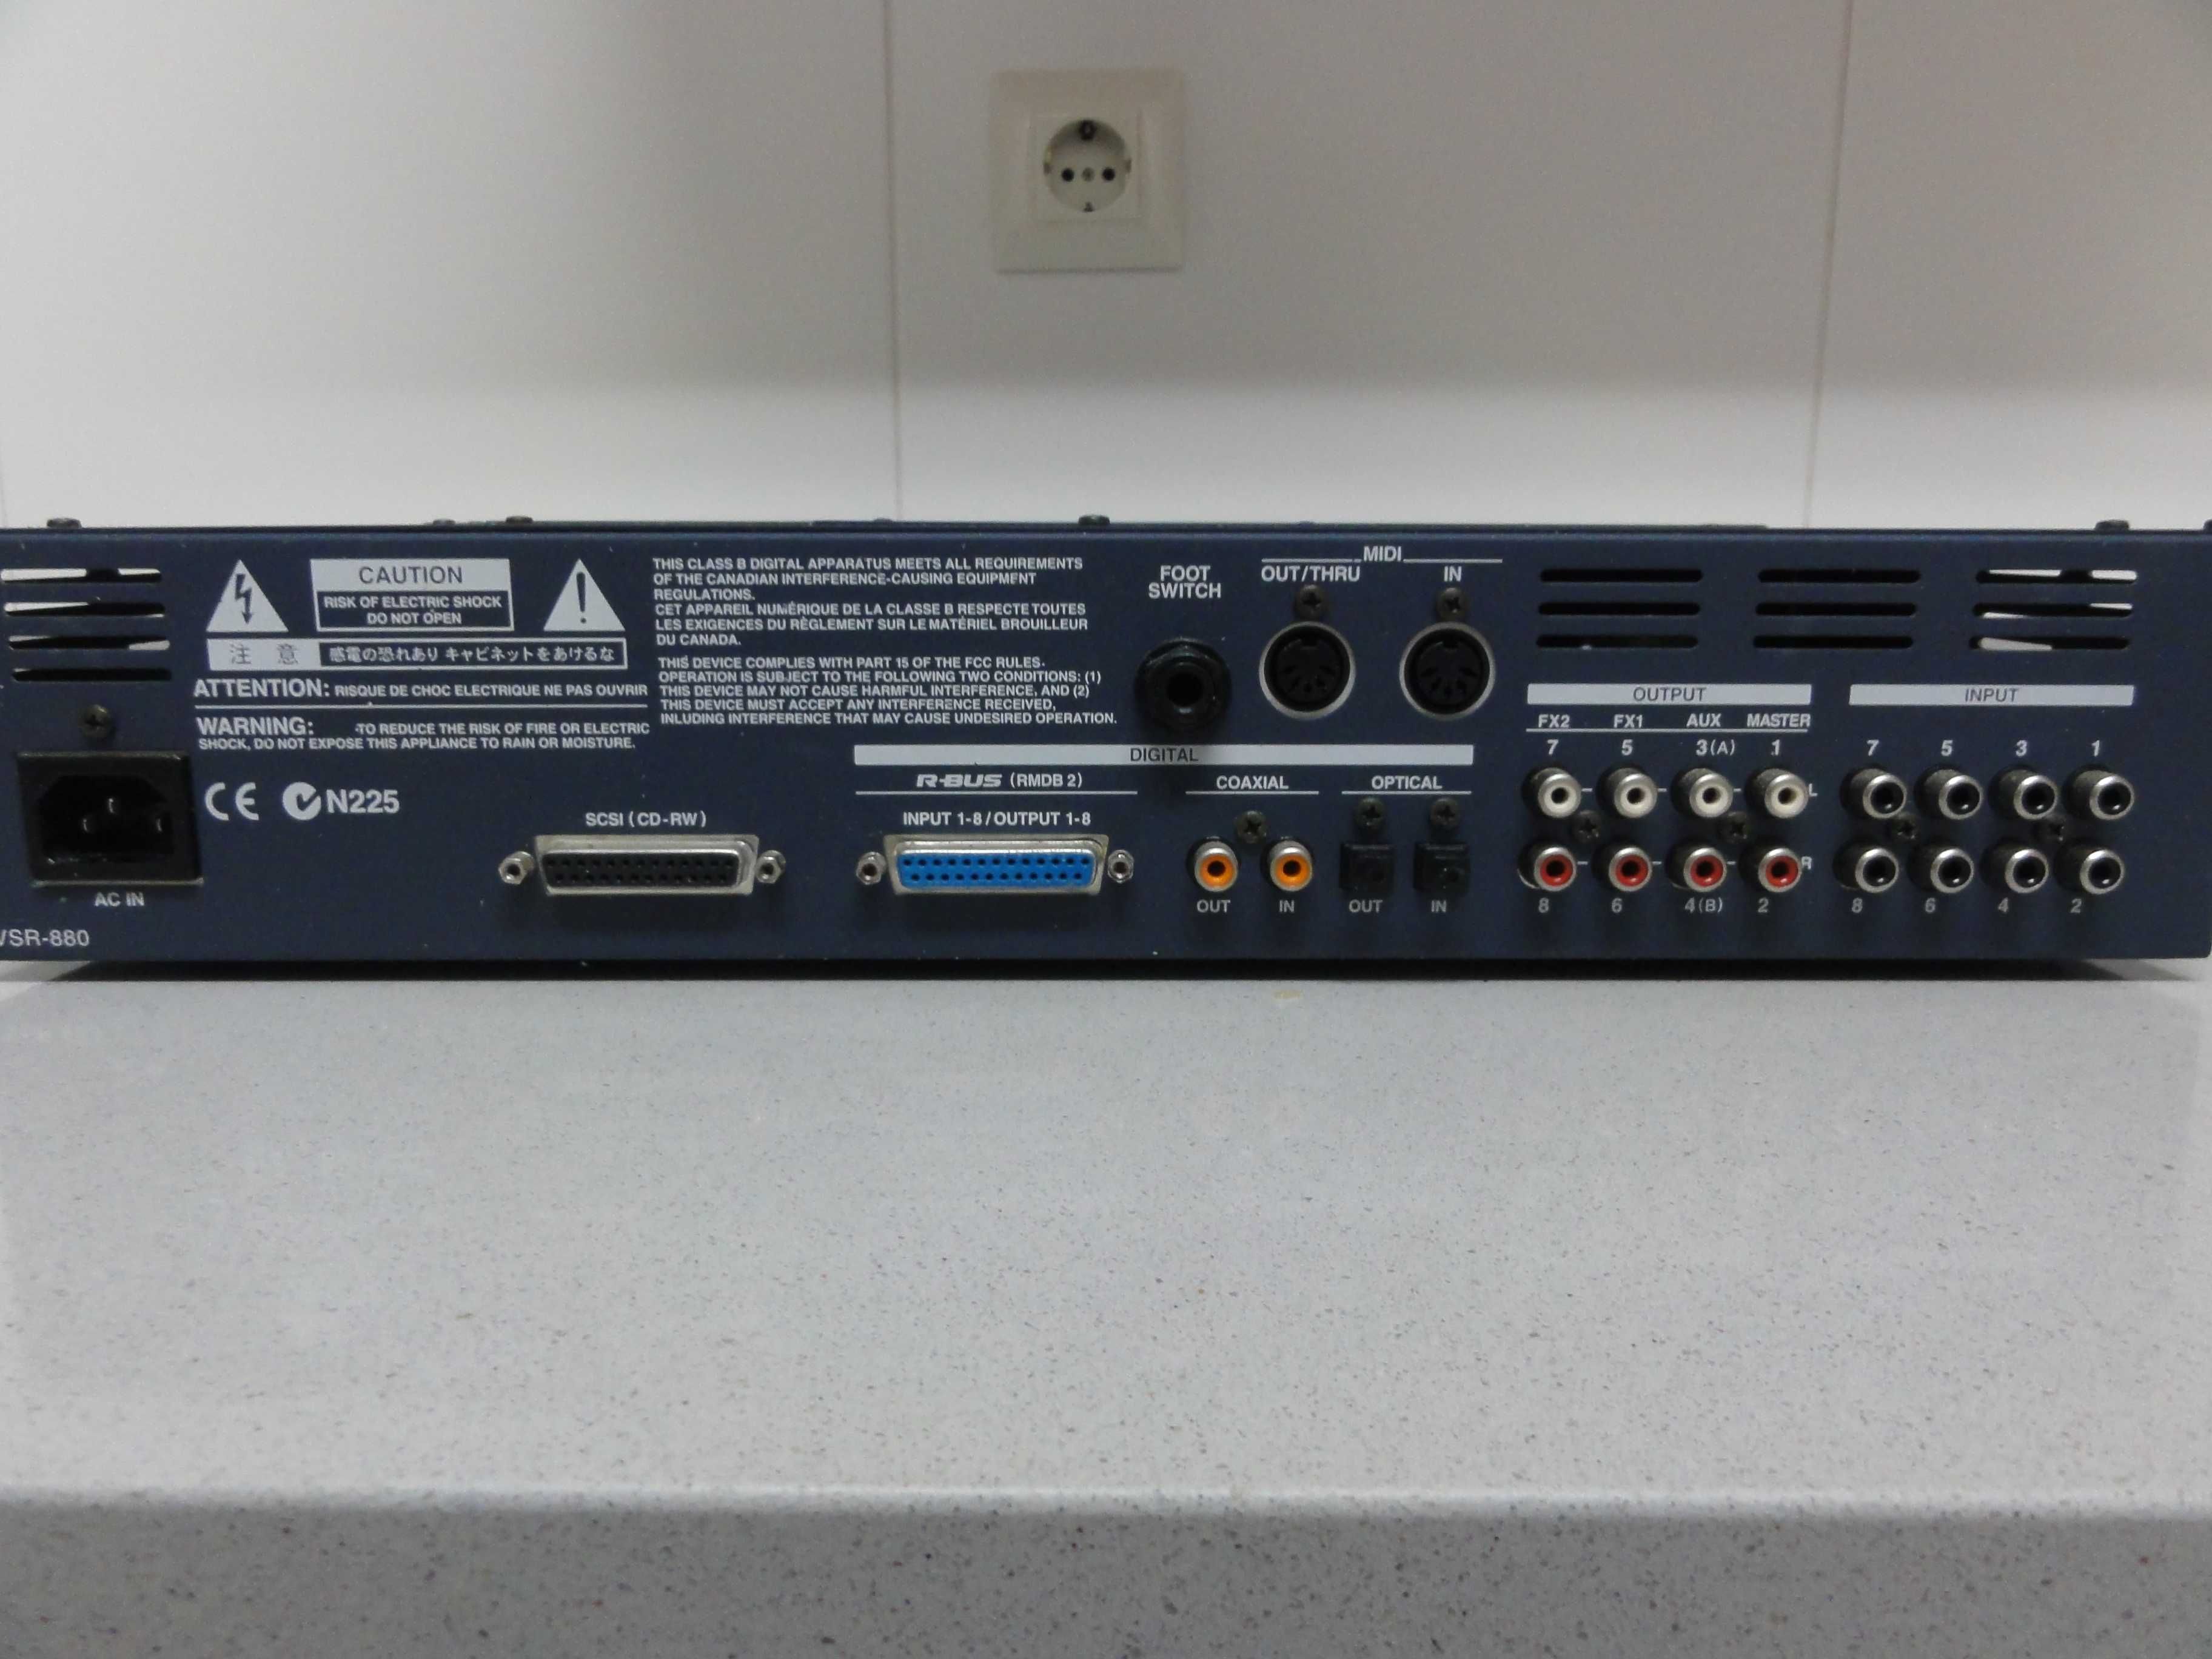 Roland VSR-880 - Gravador Digital